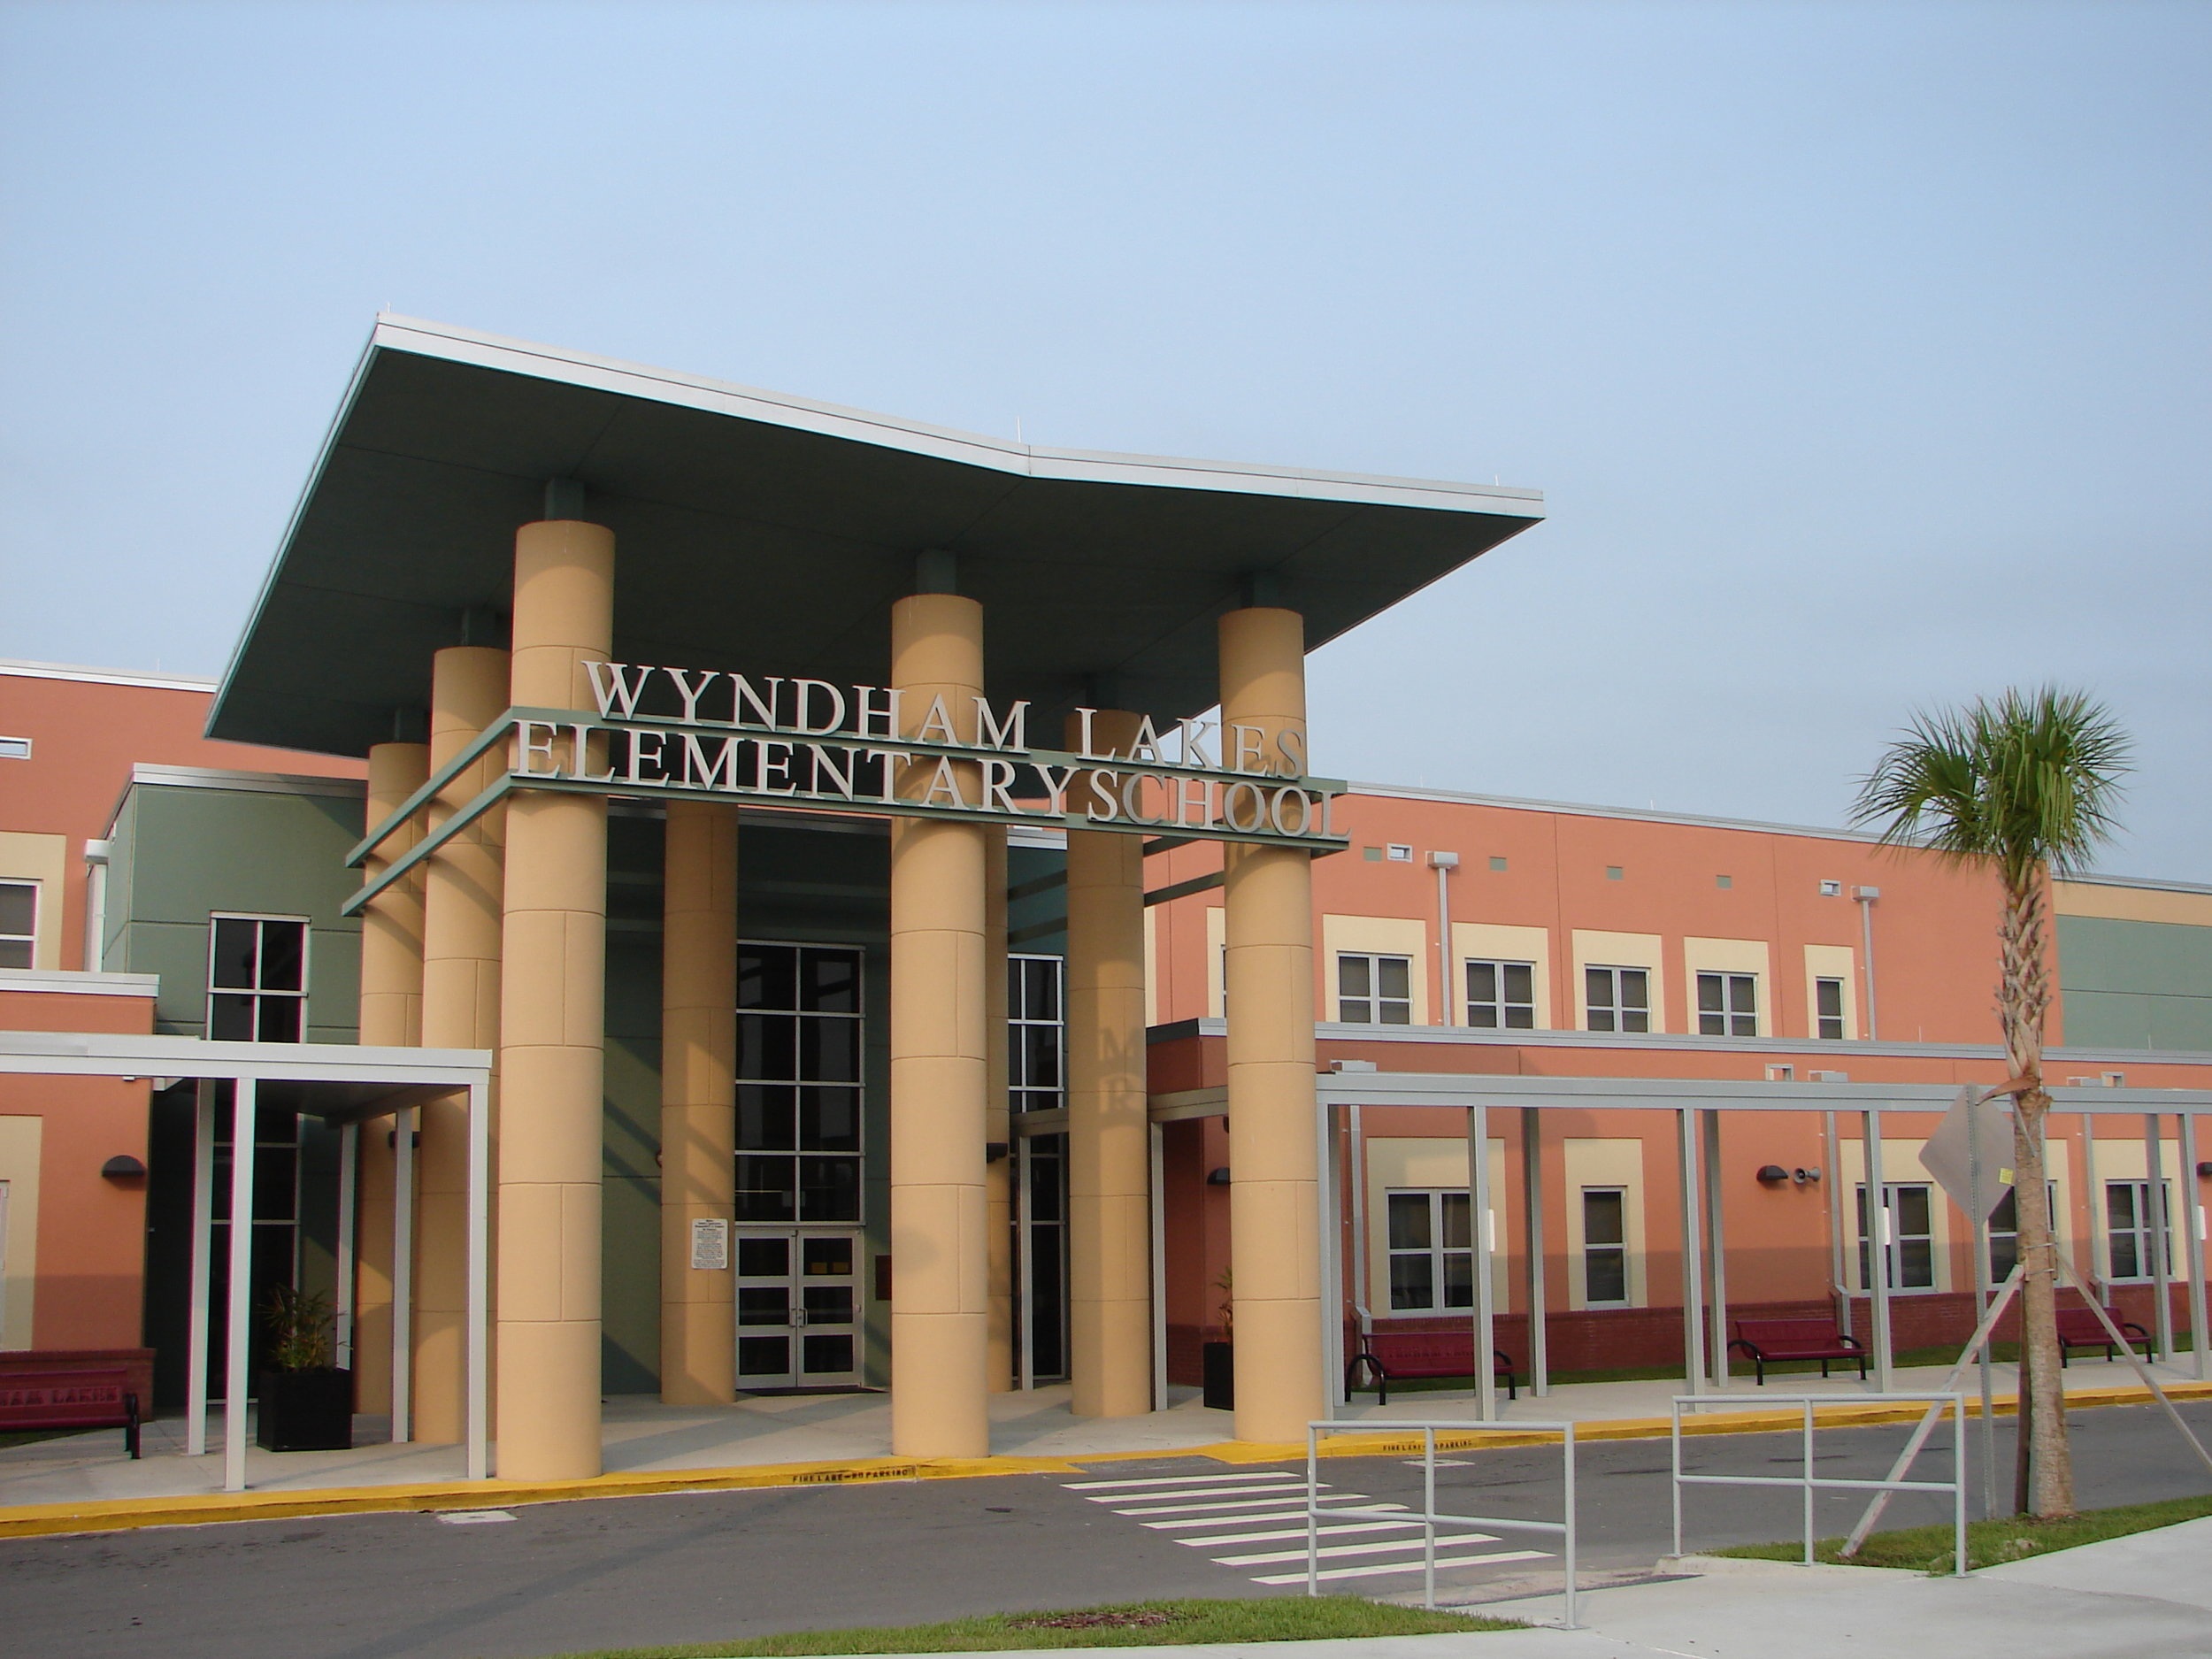 Wyndham Lakes Elementary School Main